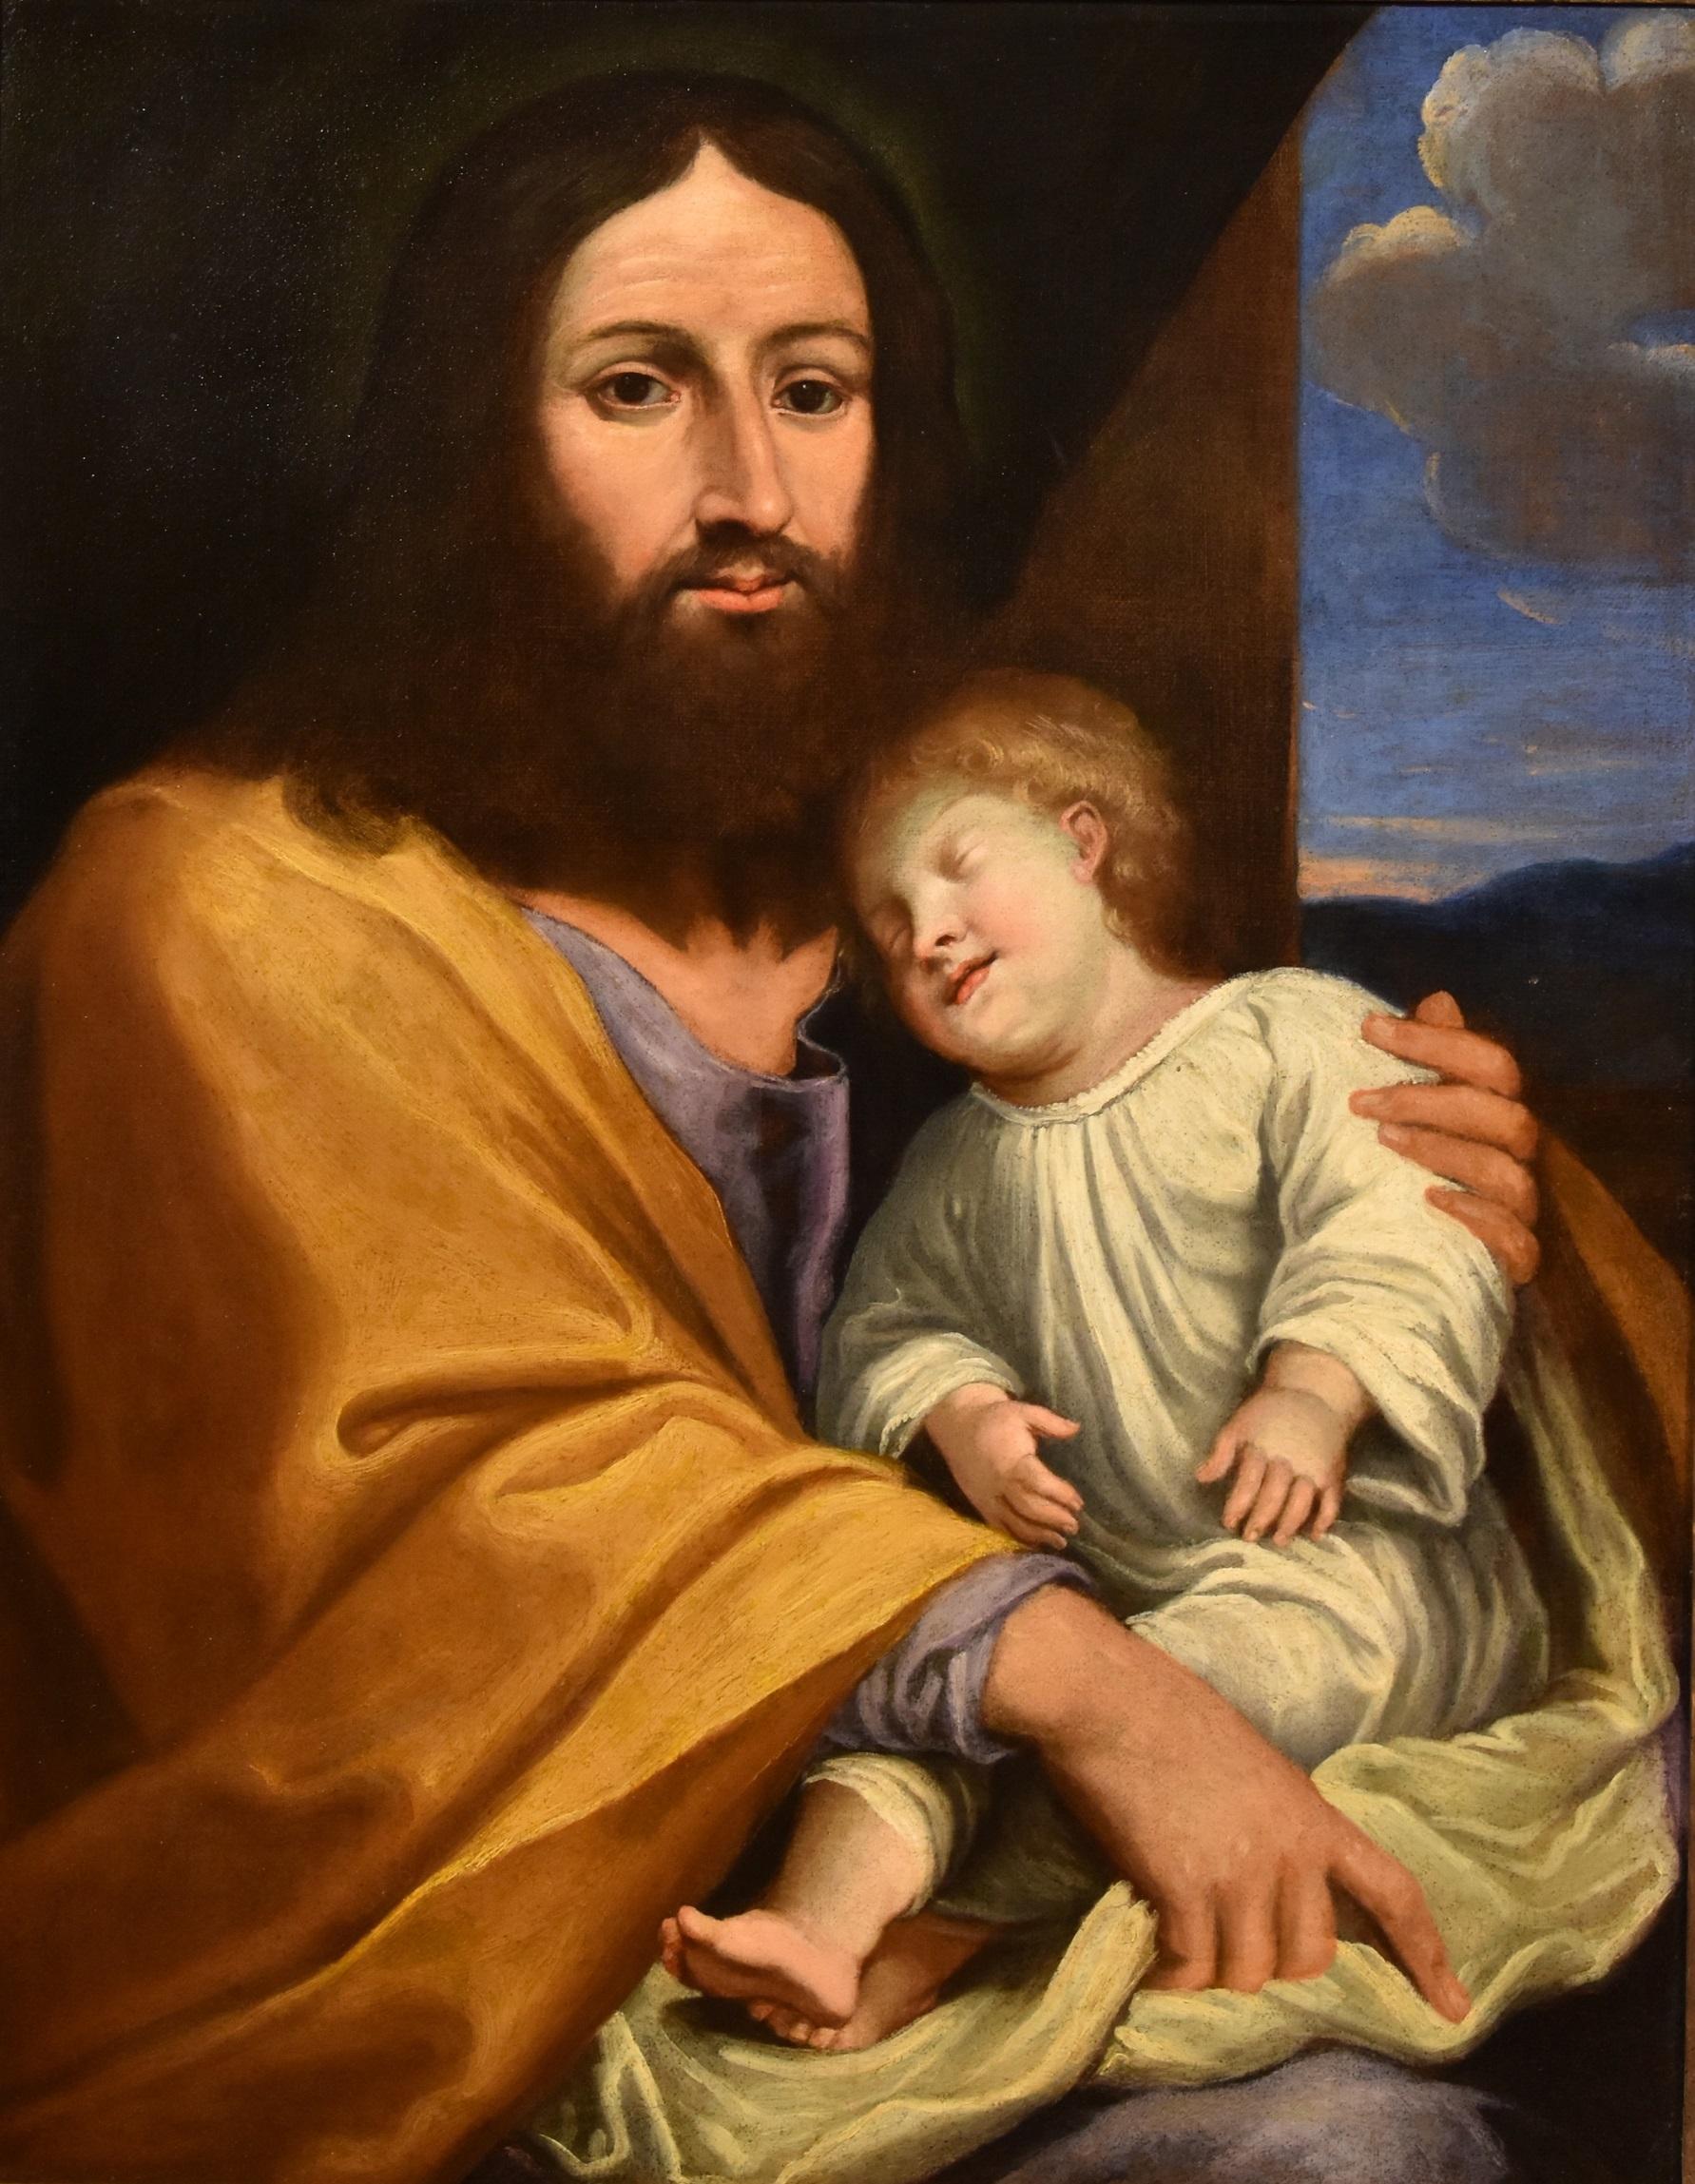 Jesus Son Salvi Paint Oil on canvas Old master 17th Century Italian Religious - Painting by Giovan Battista Salvi known as 